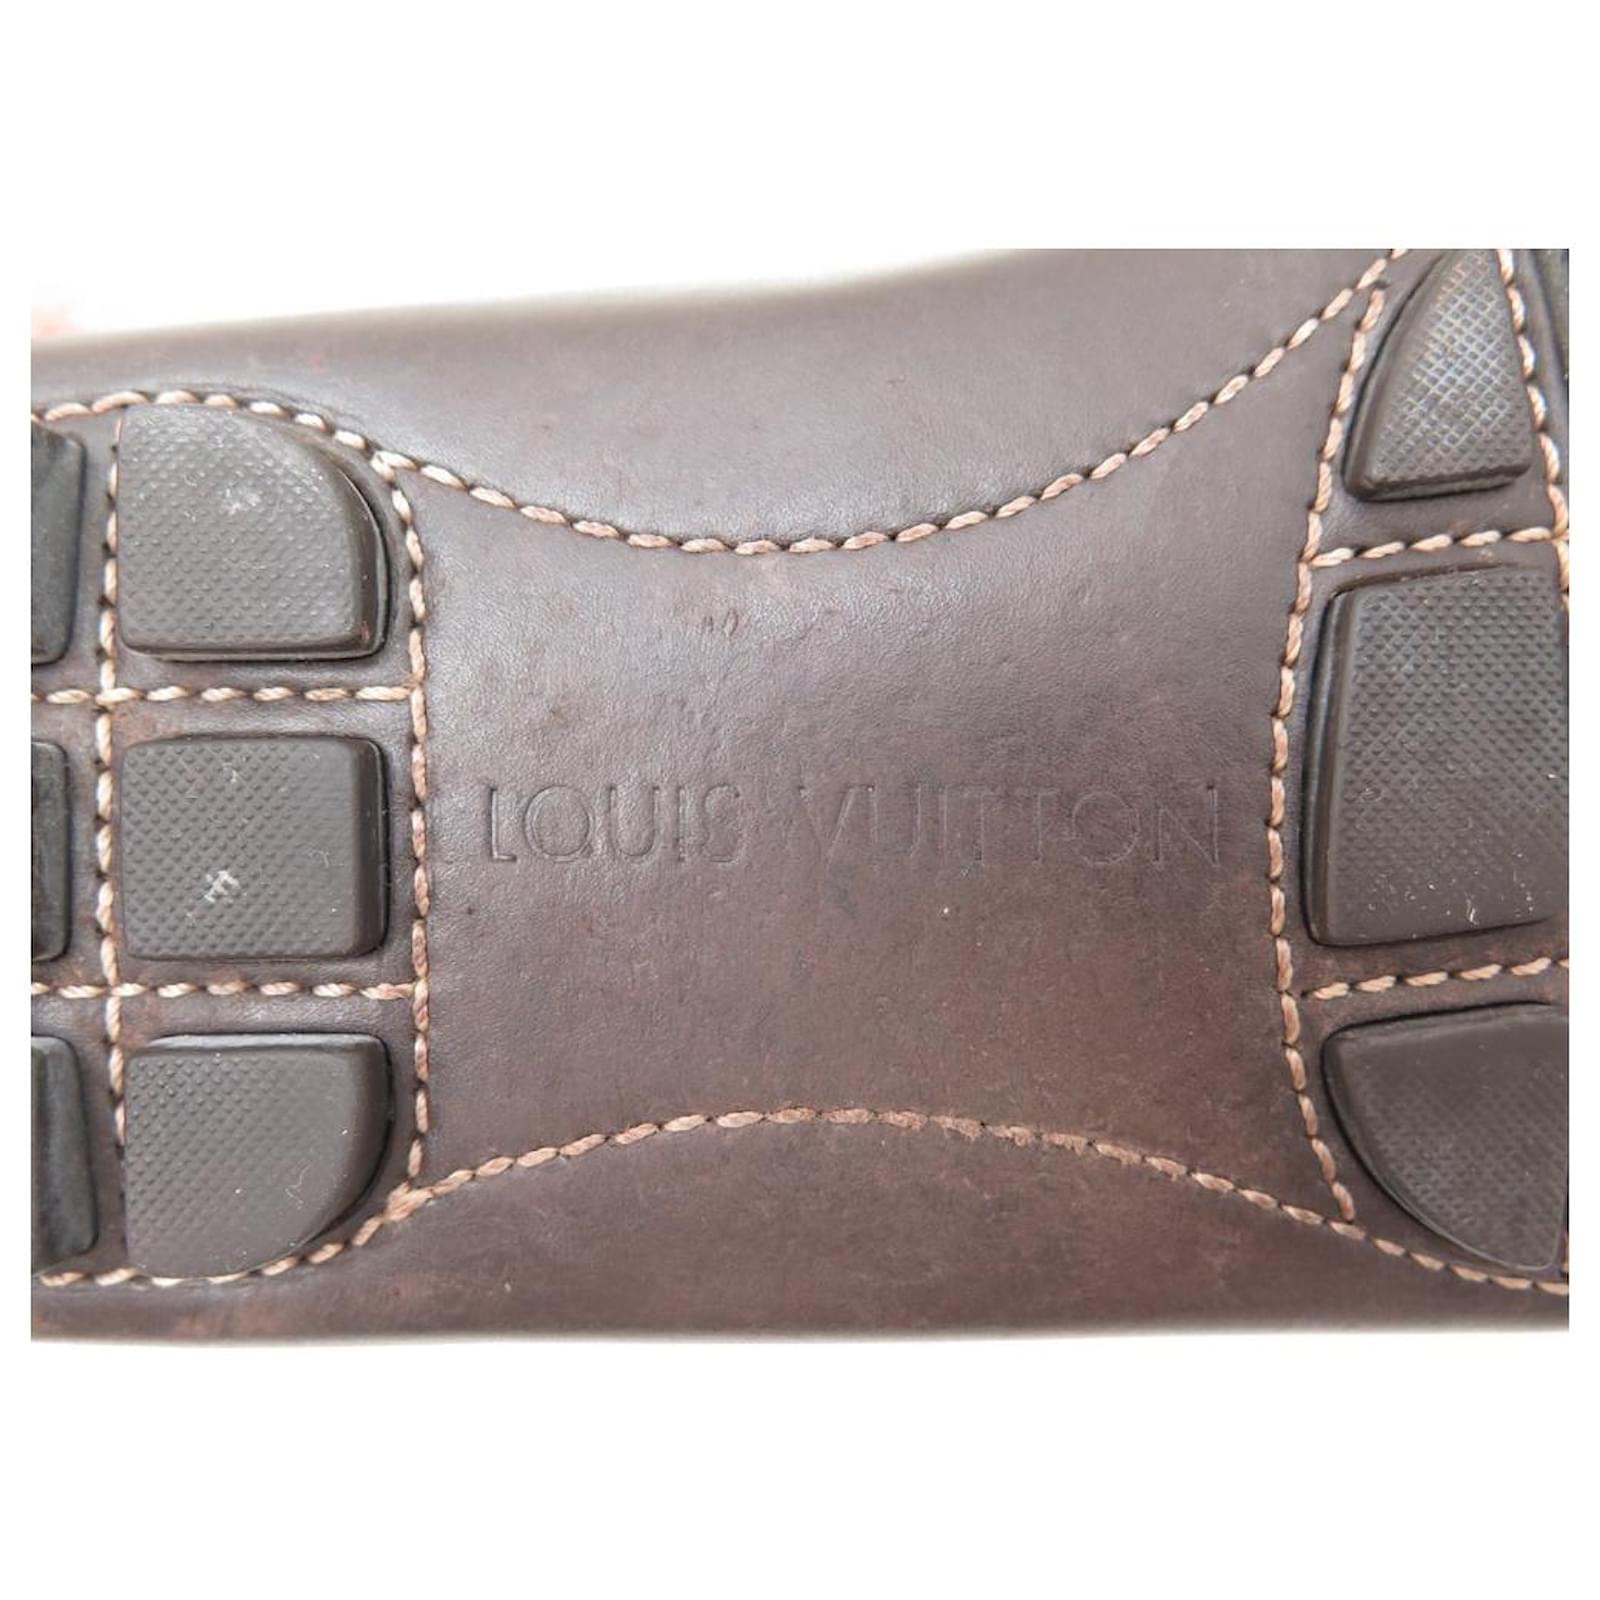 LOUIS VUITTON Monte Carlo Crocodile Leather Shoes Size 11 LV 12 US 45 Euro  11 UK